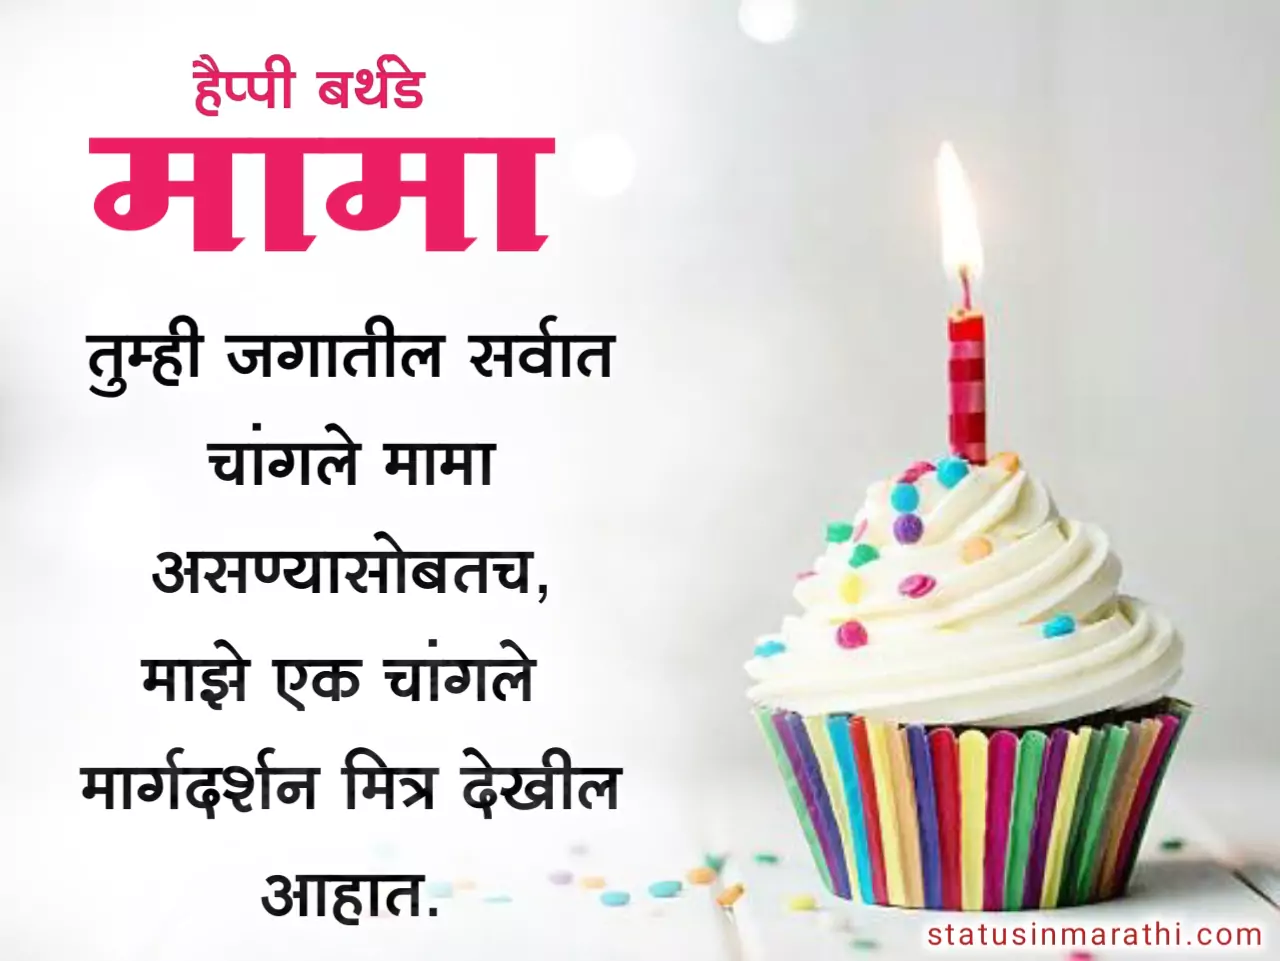 Happy Birthday Image for mama in marathi